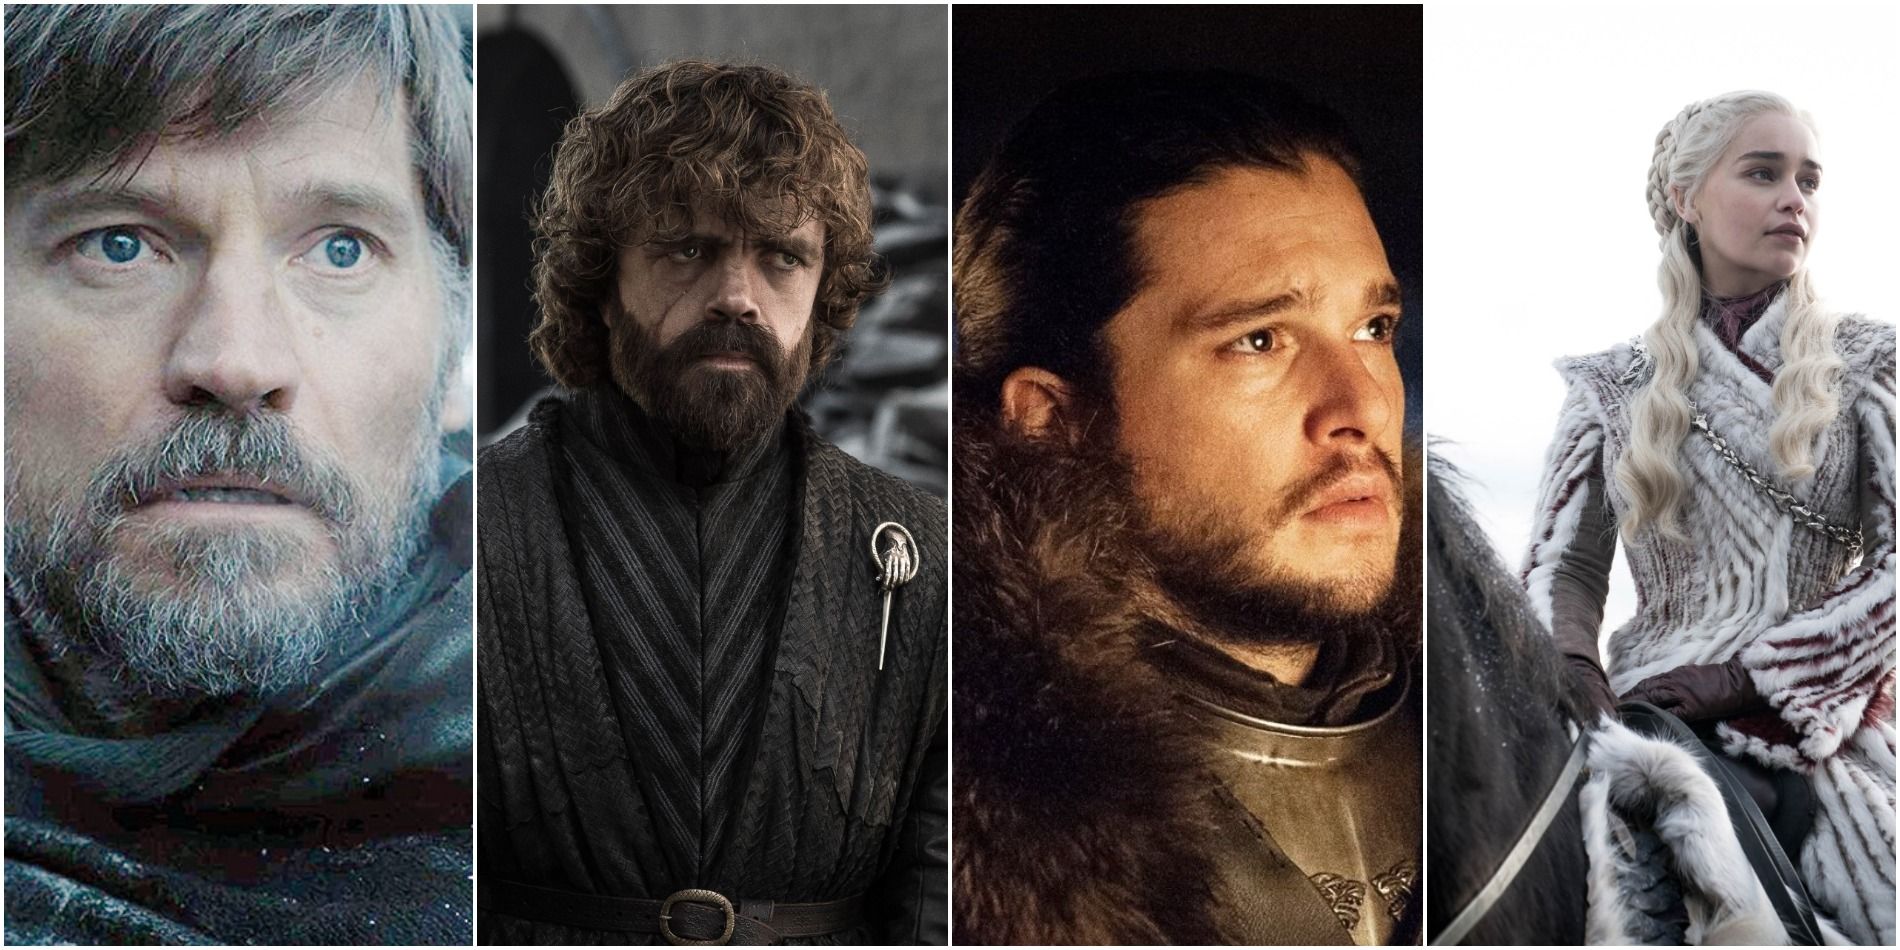 Jaime Lannister, Tyrion Lannister, Jon Snow and Daenerys Targaryen in season eight of Game of Thrones